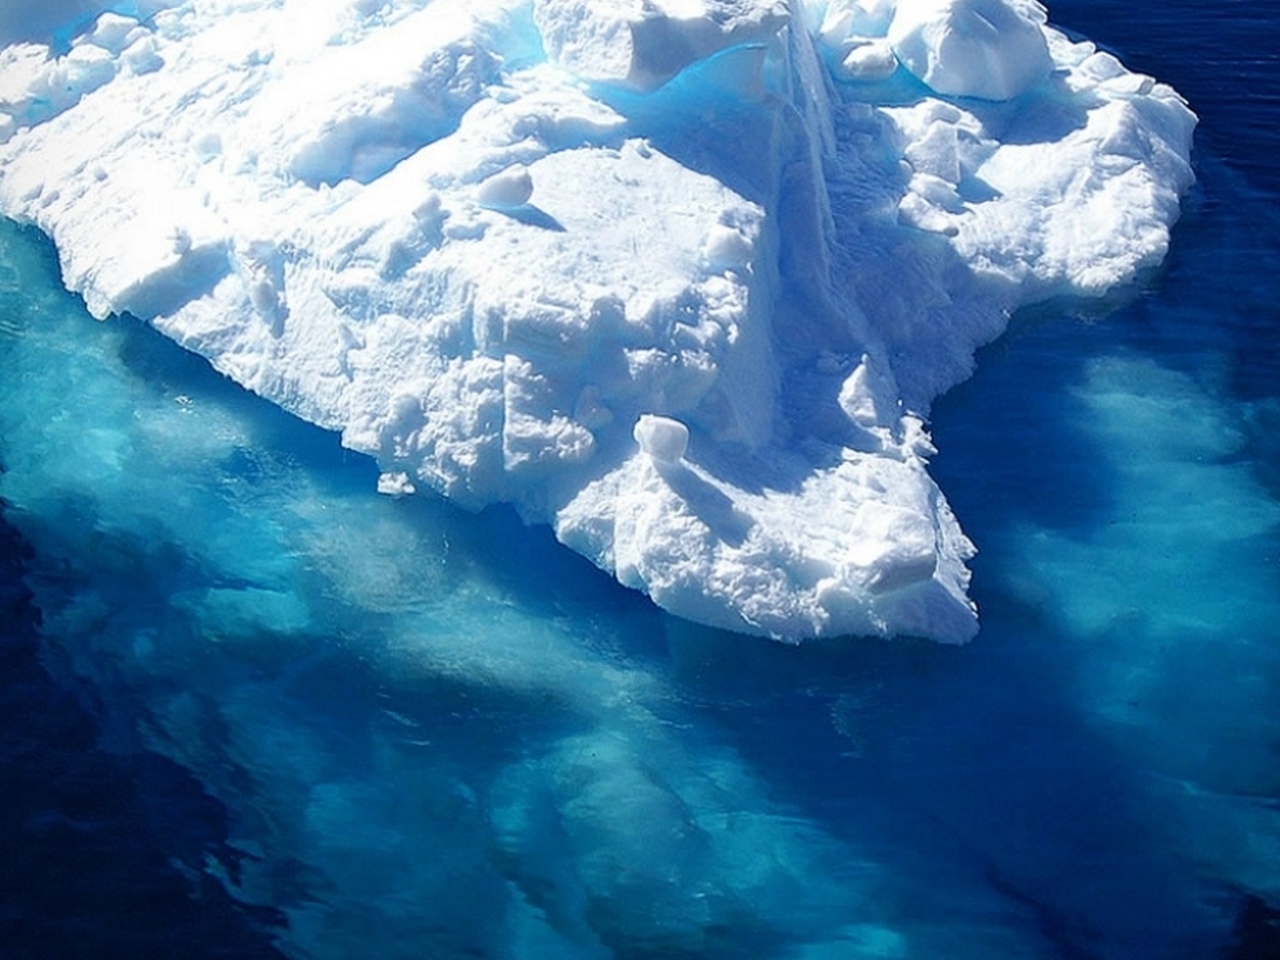 Айсберг в океане текст. Айсберги Антарктиды. Северная Атлантика Айсберг. Айсберги в Атлантическом океане.